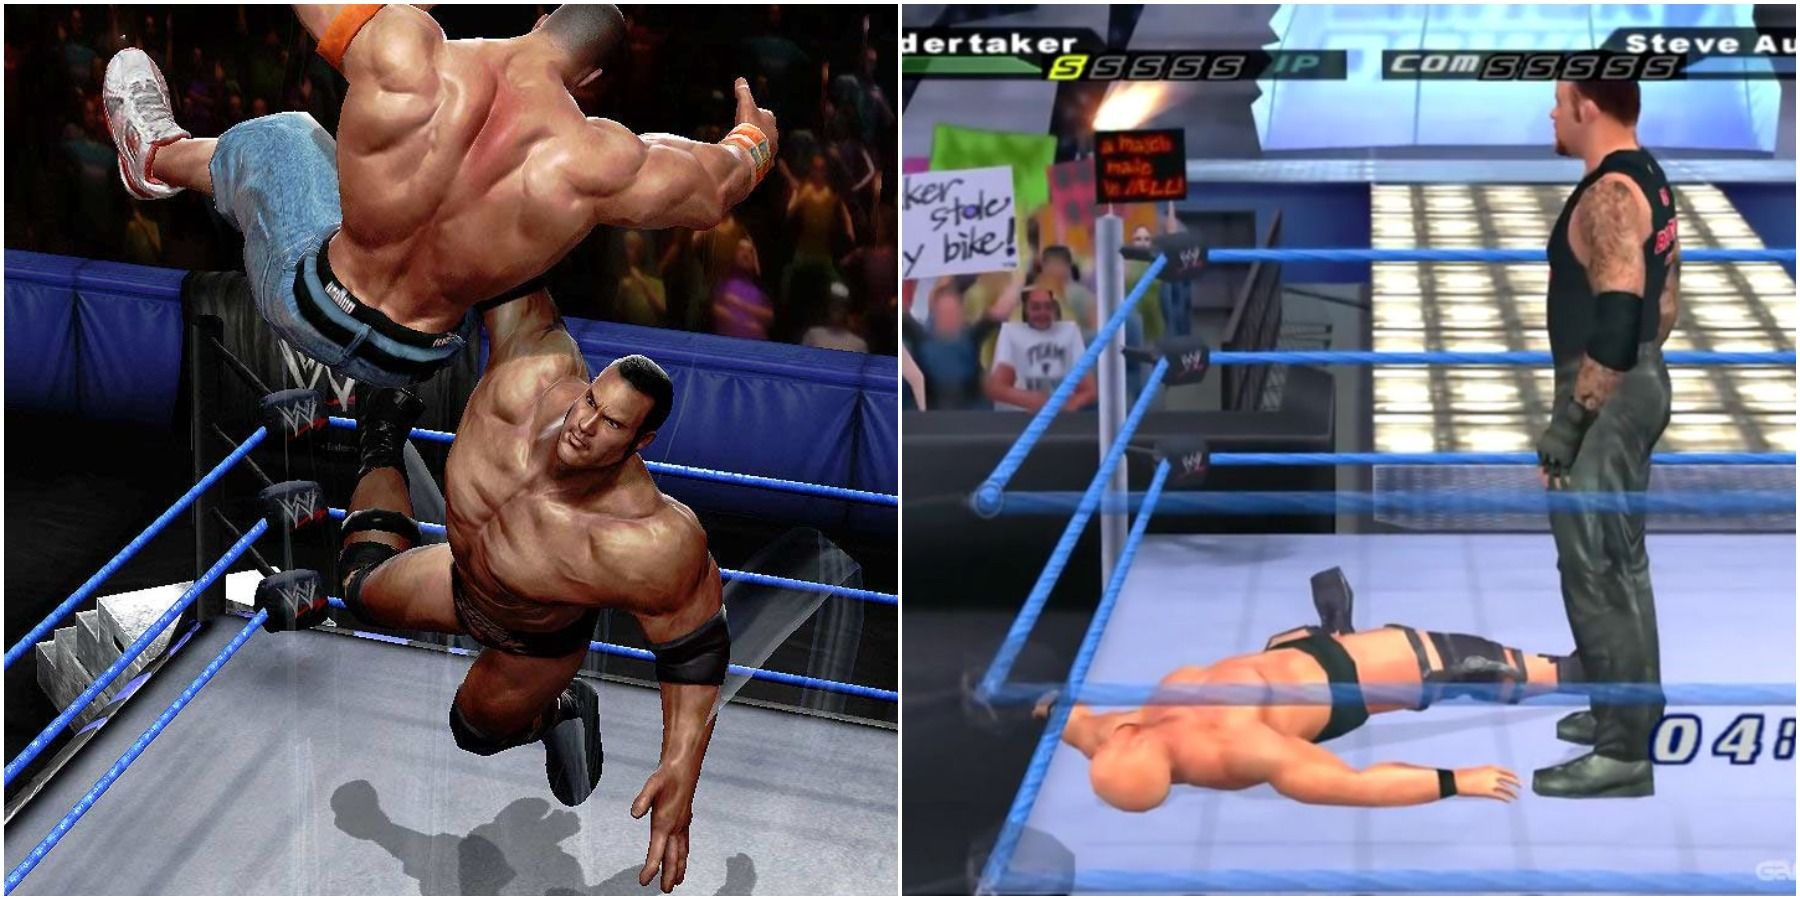 (Left) The Rock fighting Cena (Right) The Undertake fighting Steve Austin